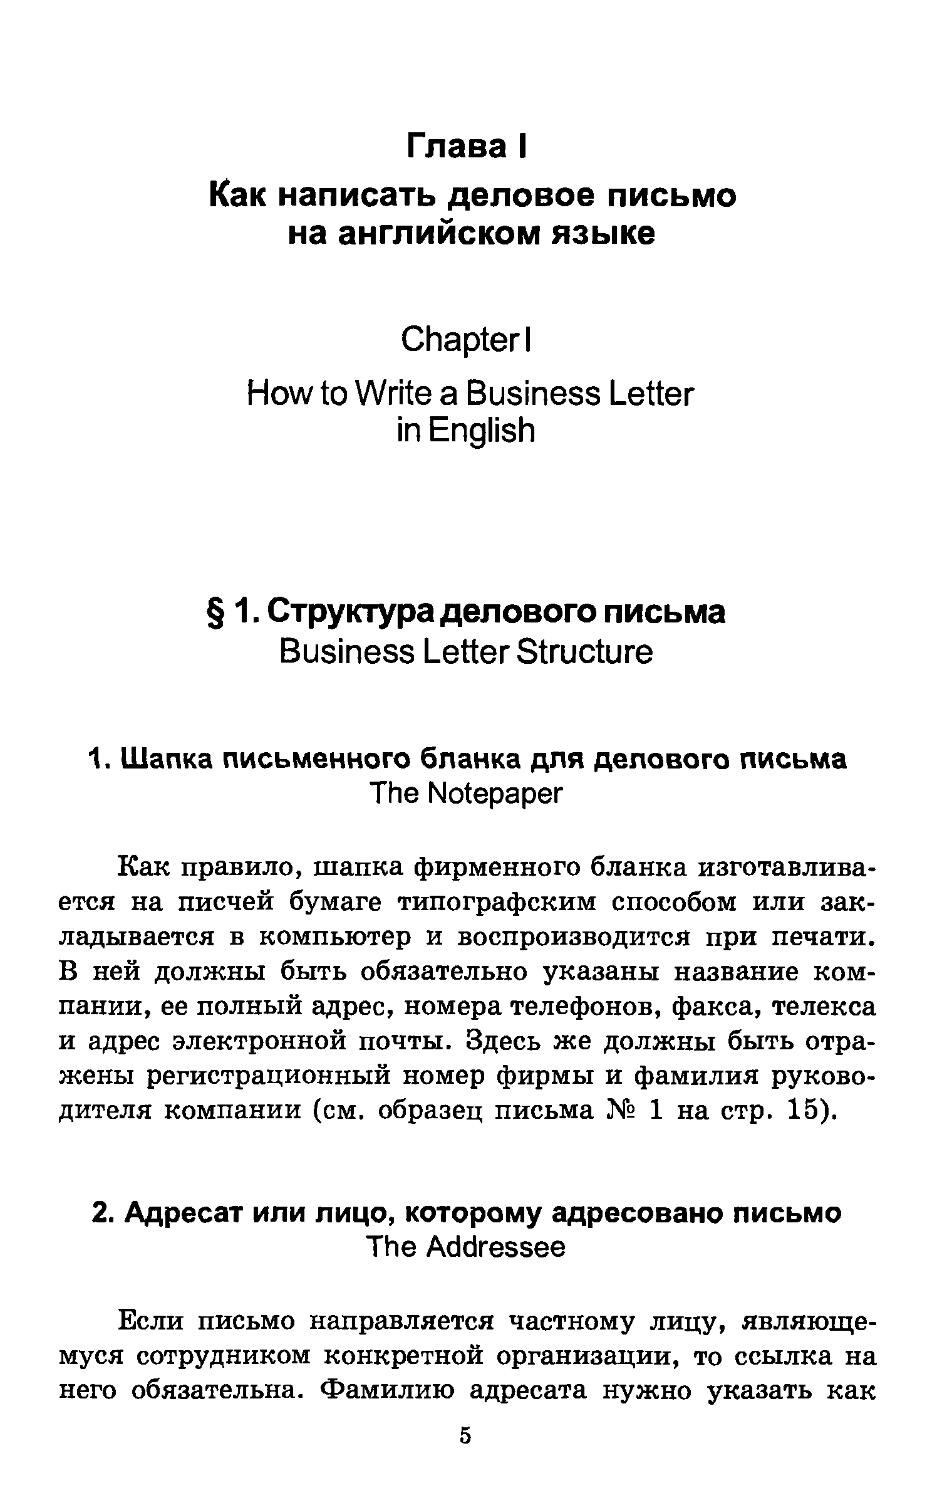 ГЛАВА I. Как написать деловое письмо на английском языке. Chapter I. How to Write a Business Letter in English